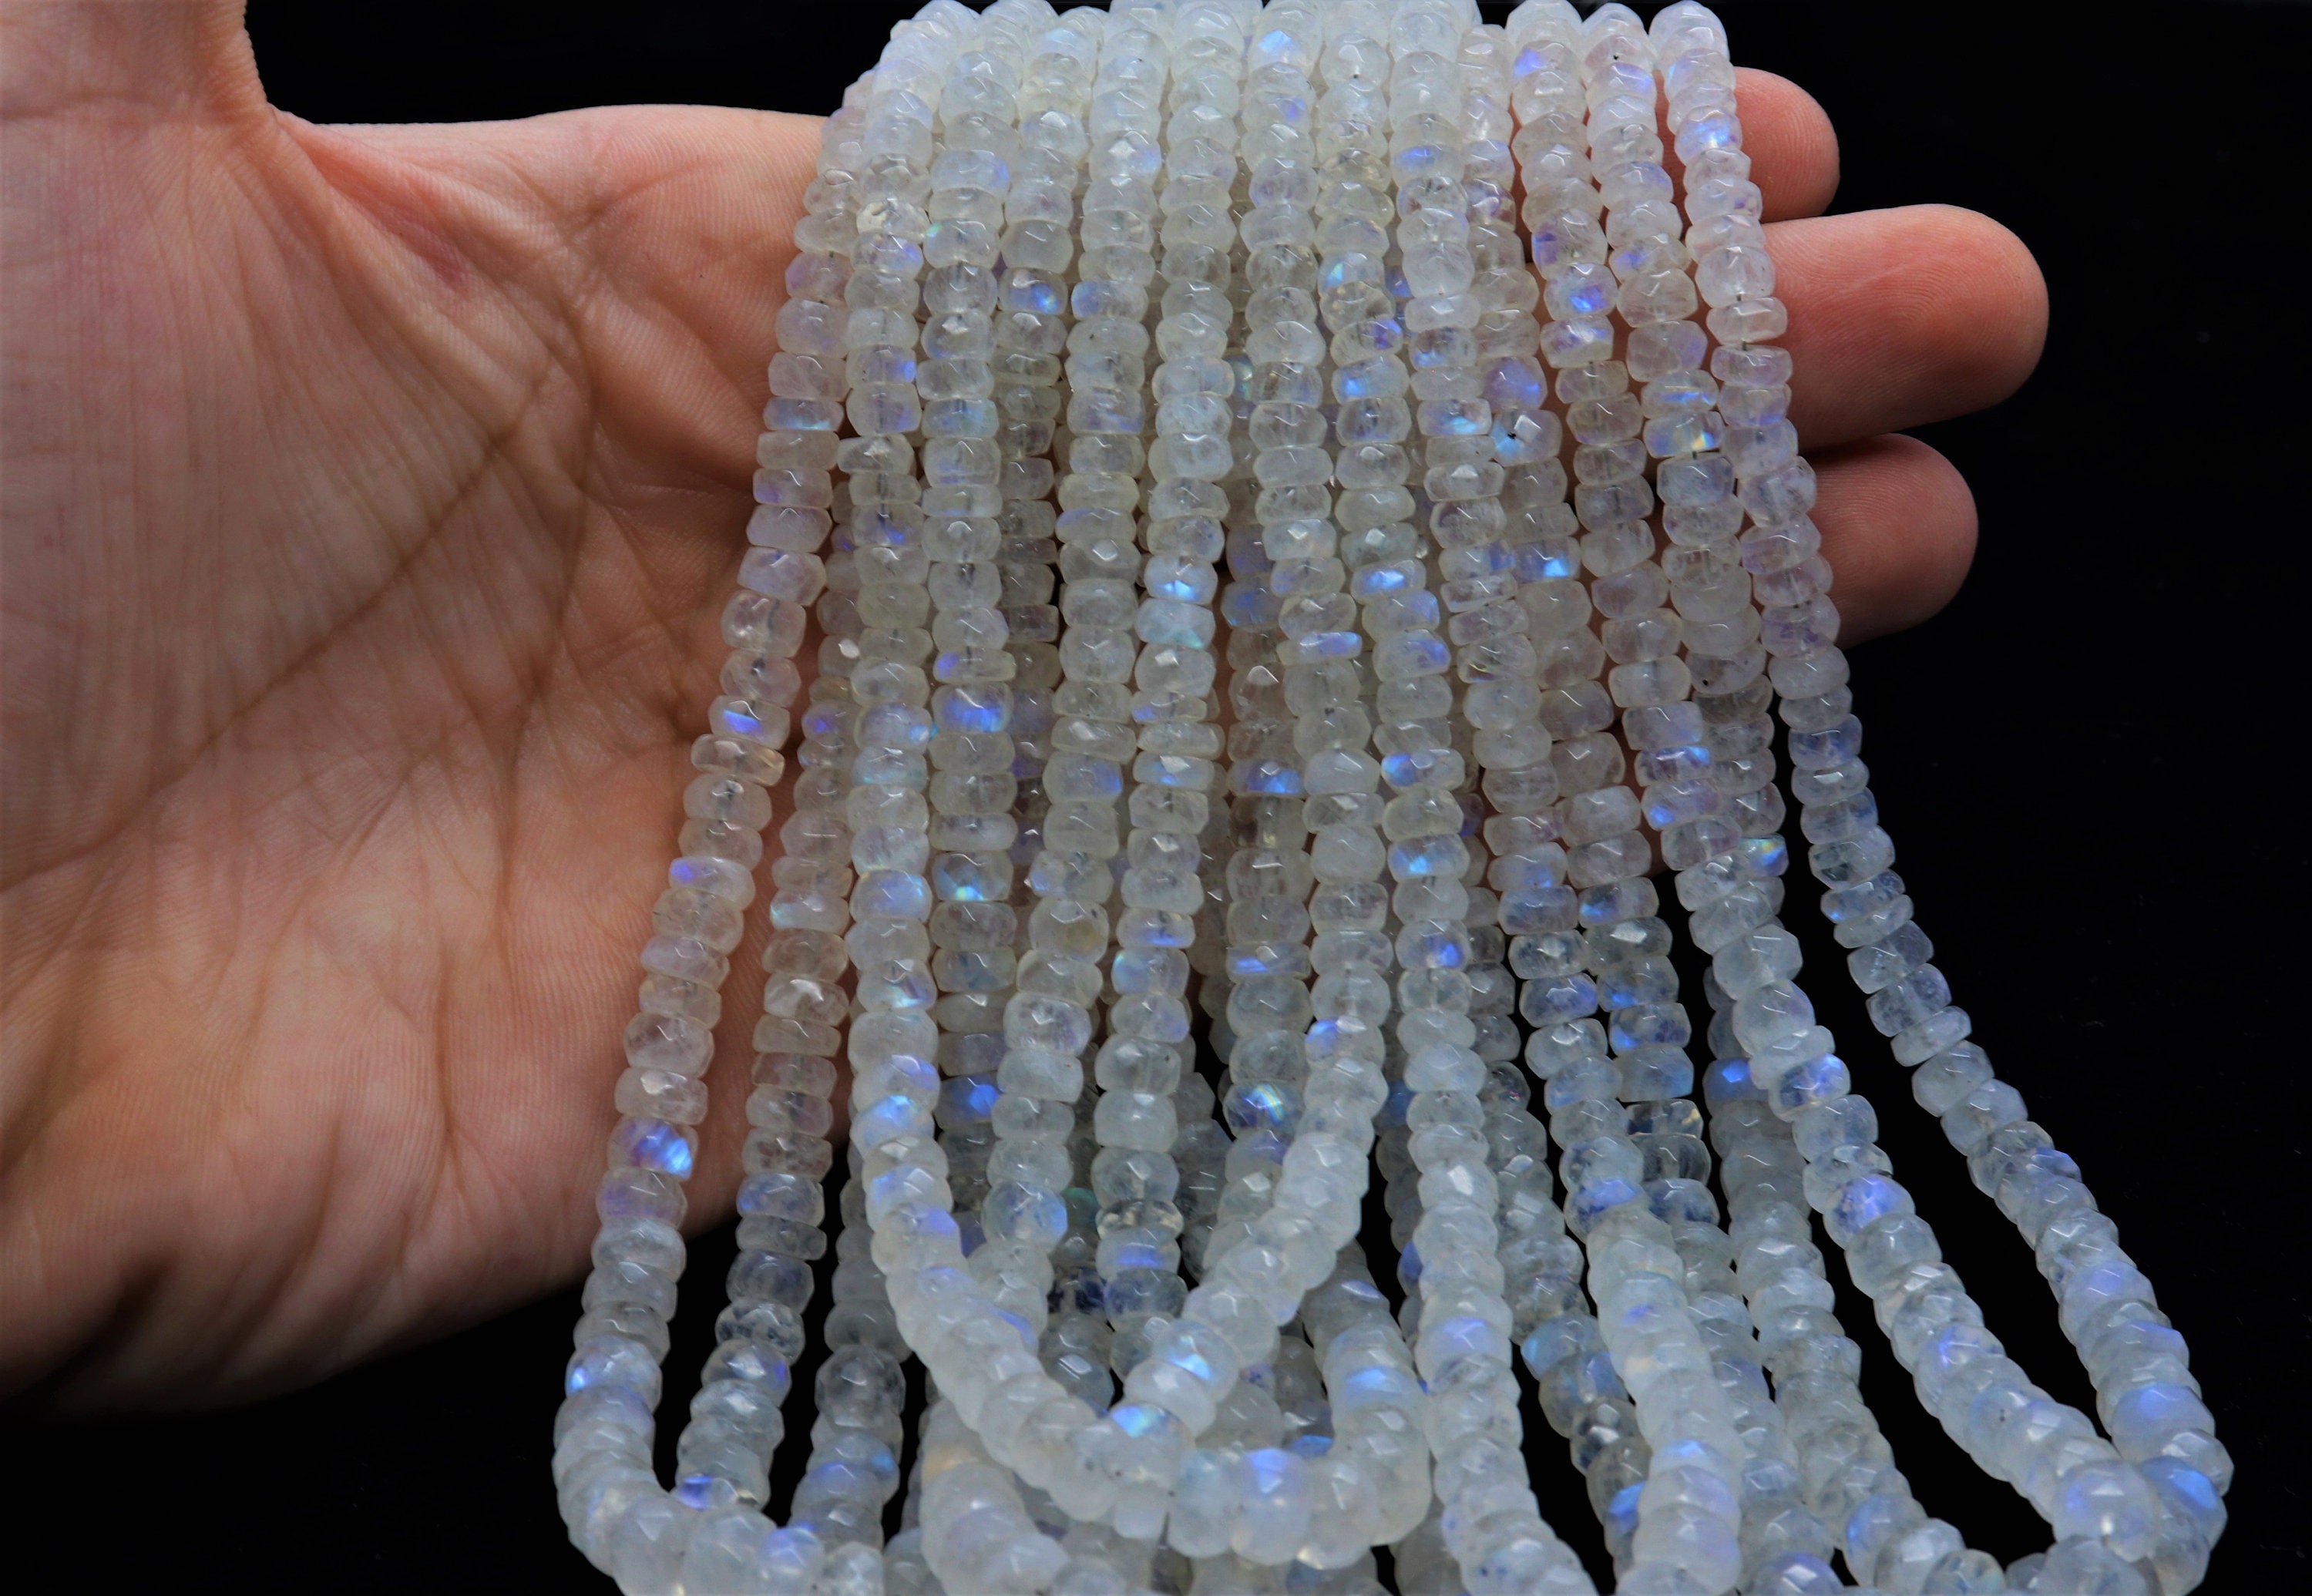 Natural Rainbow Moonstone Smooth Tumble Beads, 15x20 mm to 20x36 mm,  Rainbow Moonstone Beads, 18 Inches Full Strand, Price Per Strand